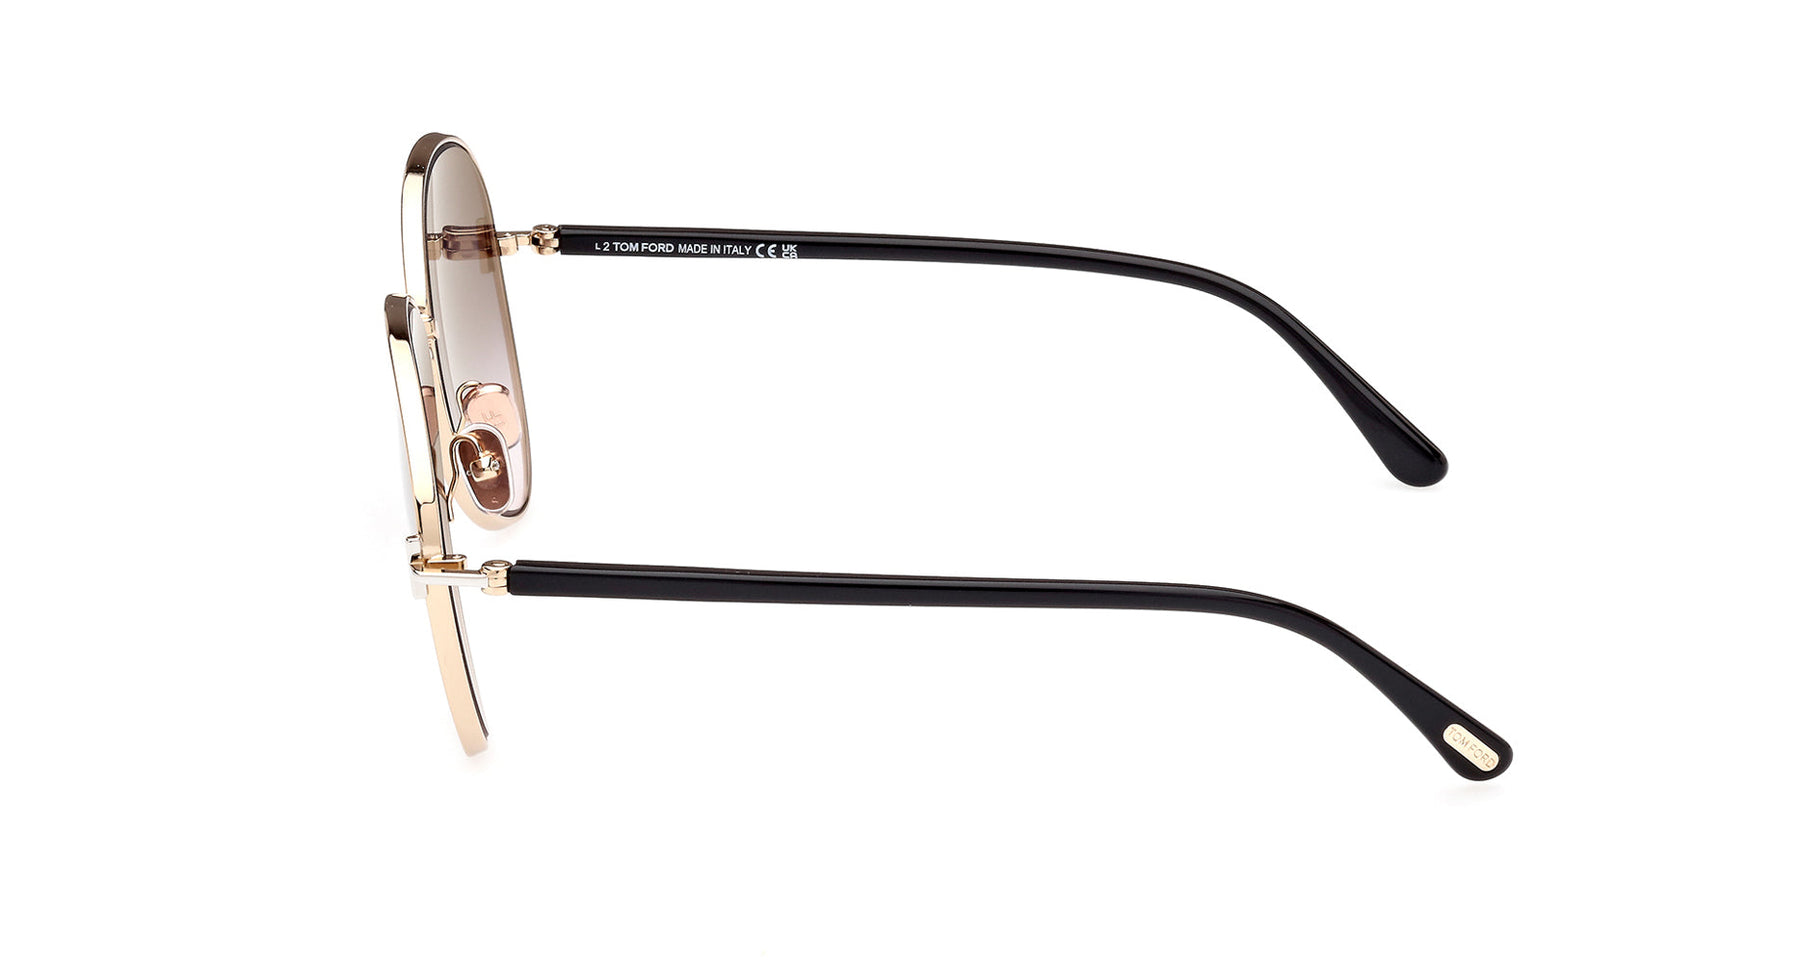 Tom Ford Rio TF1028 Aviator Sunglasses | Fashion Eyewear US